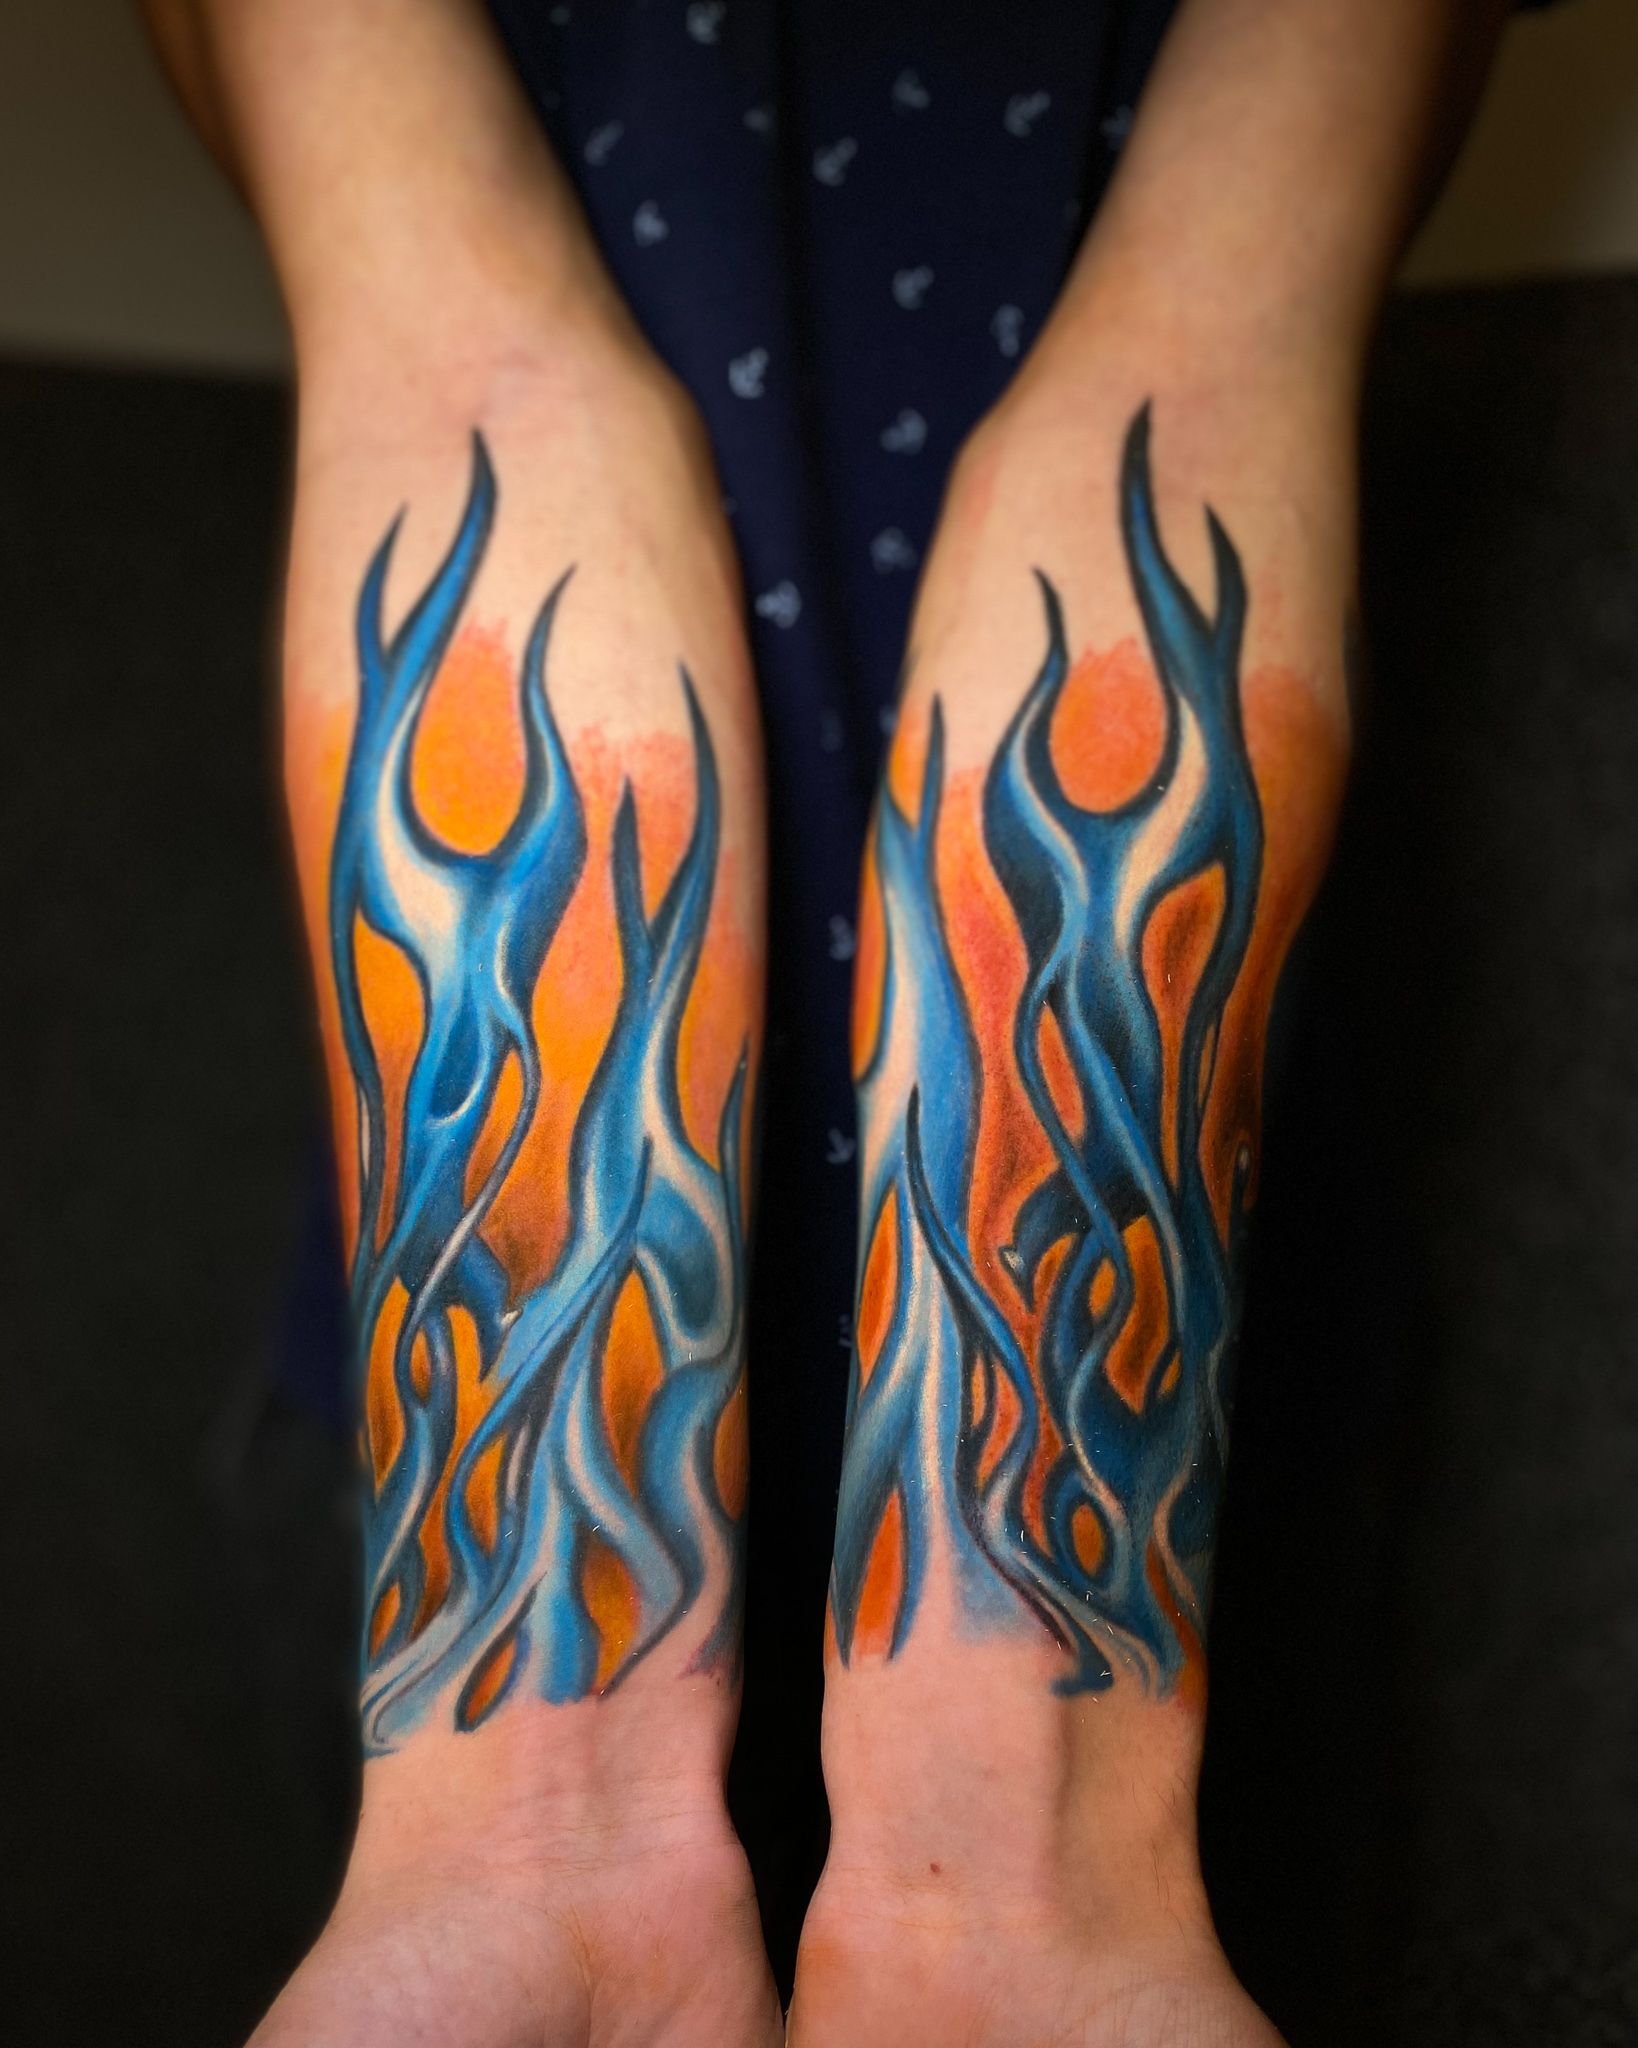 Waterproof Temporary Tattoo Tsticker Black And Blue Fire Totem Tatoo Water  Transfer Fake Tatoo Flash Tatto 1056cm For Man  Temporary Tattoos   AliExpress